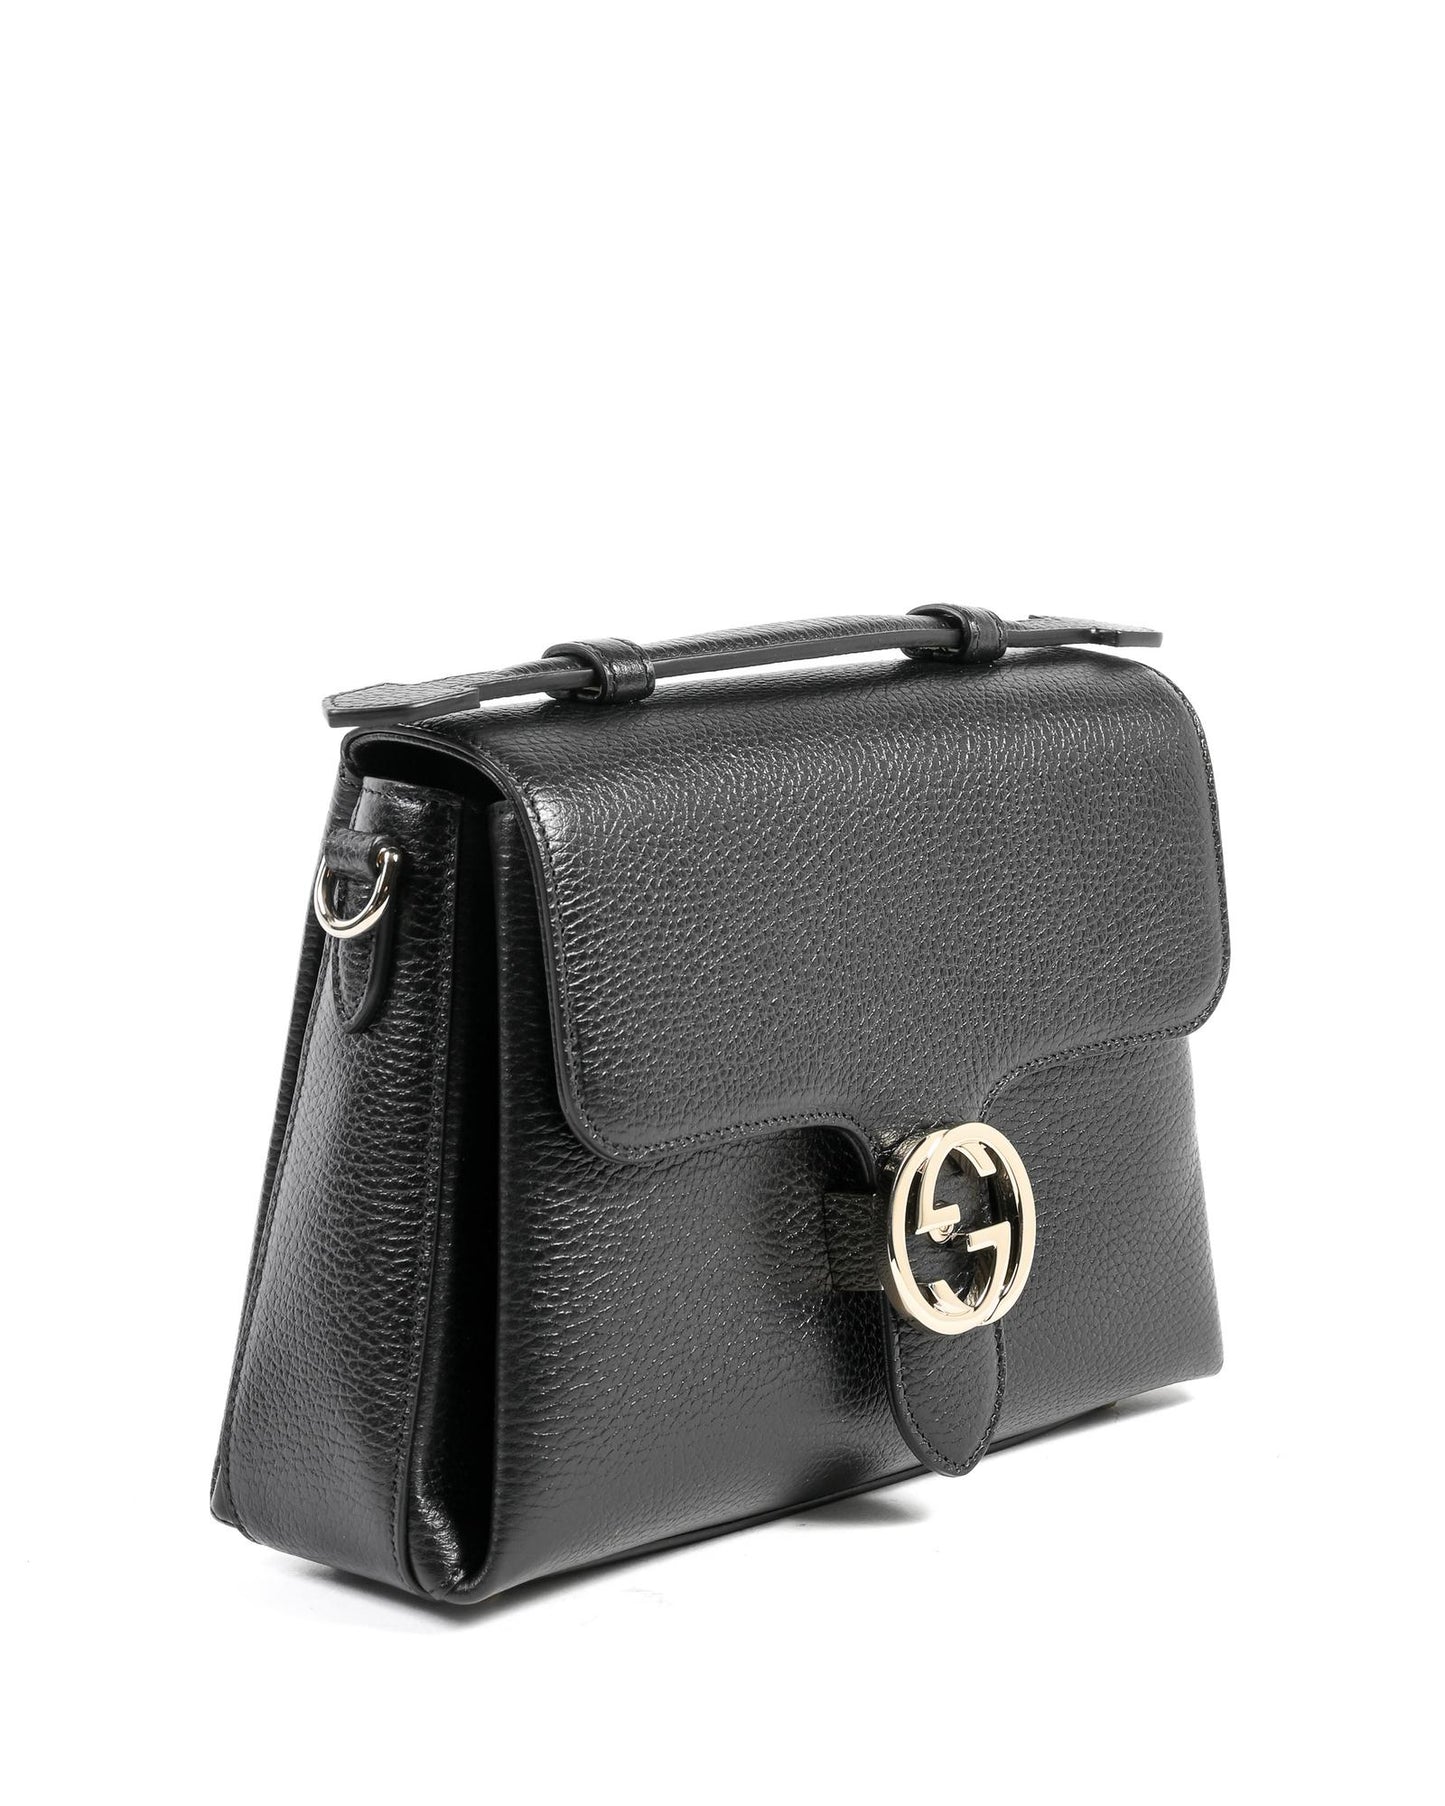 Gucci Women's Leather Interlocking Chain Bag in Black